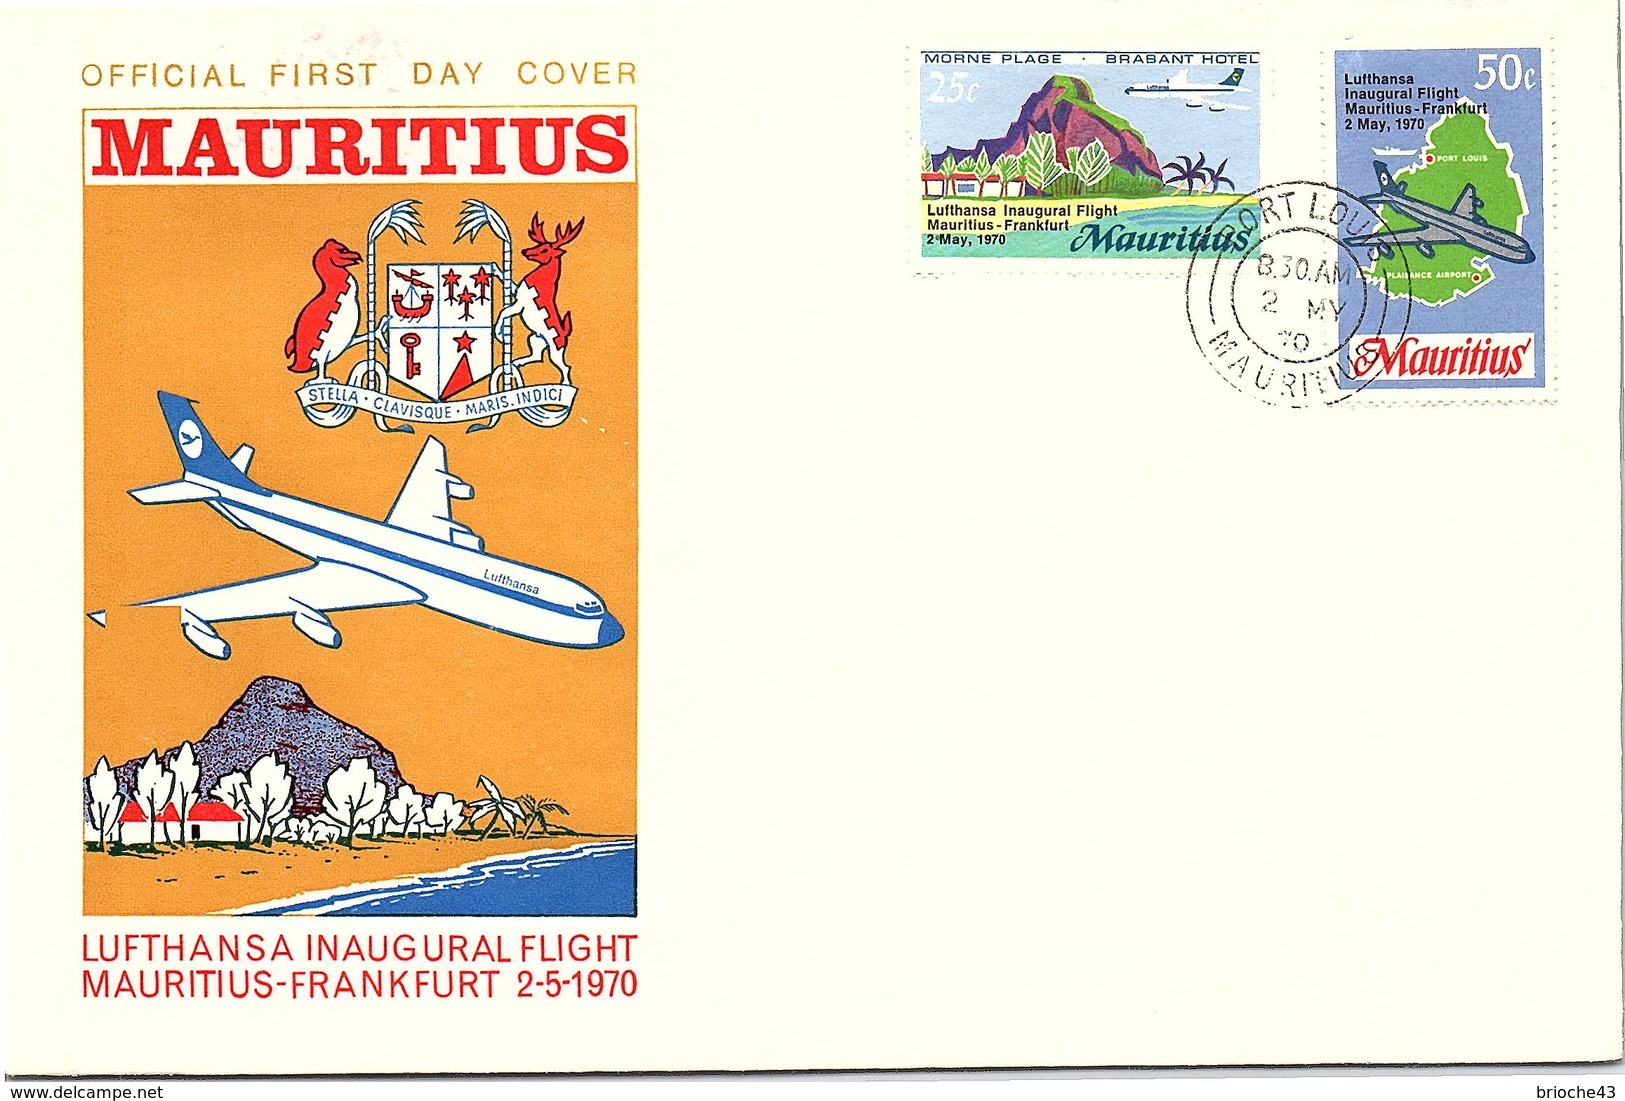 MAURITIUS  - FDC LUFTHANSA INAUGURAL FLIGHT MAURITIUS-FRANKFURT 2.5.1970 - PORT LOUIS 2.5.70  / 2 - Mauritius (1968-...)